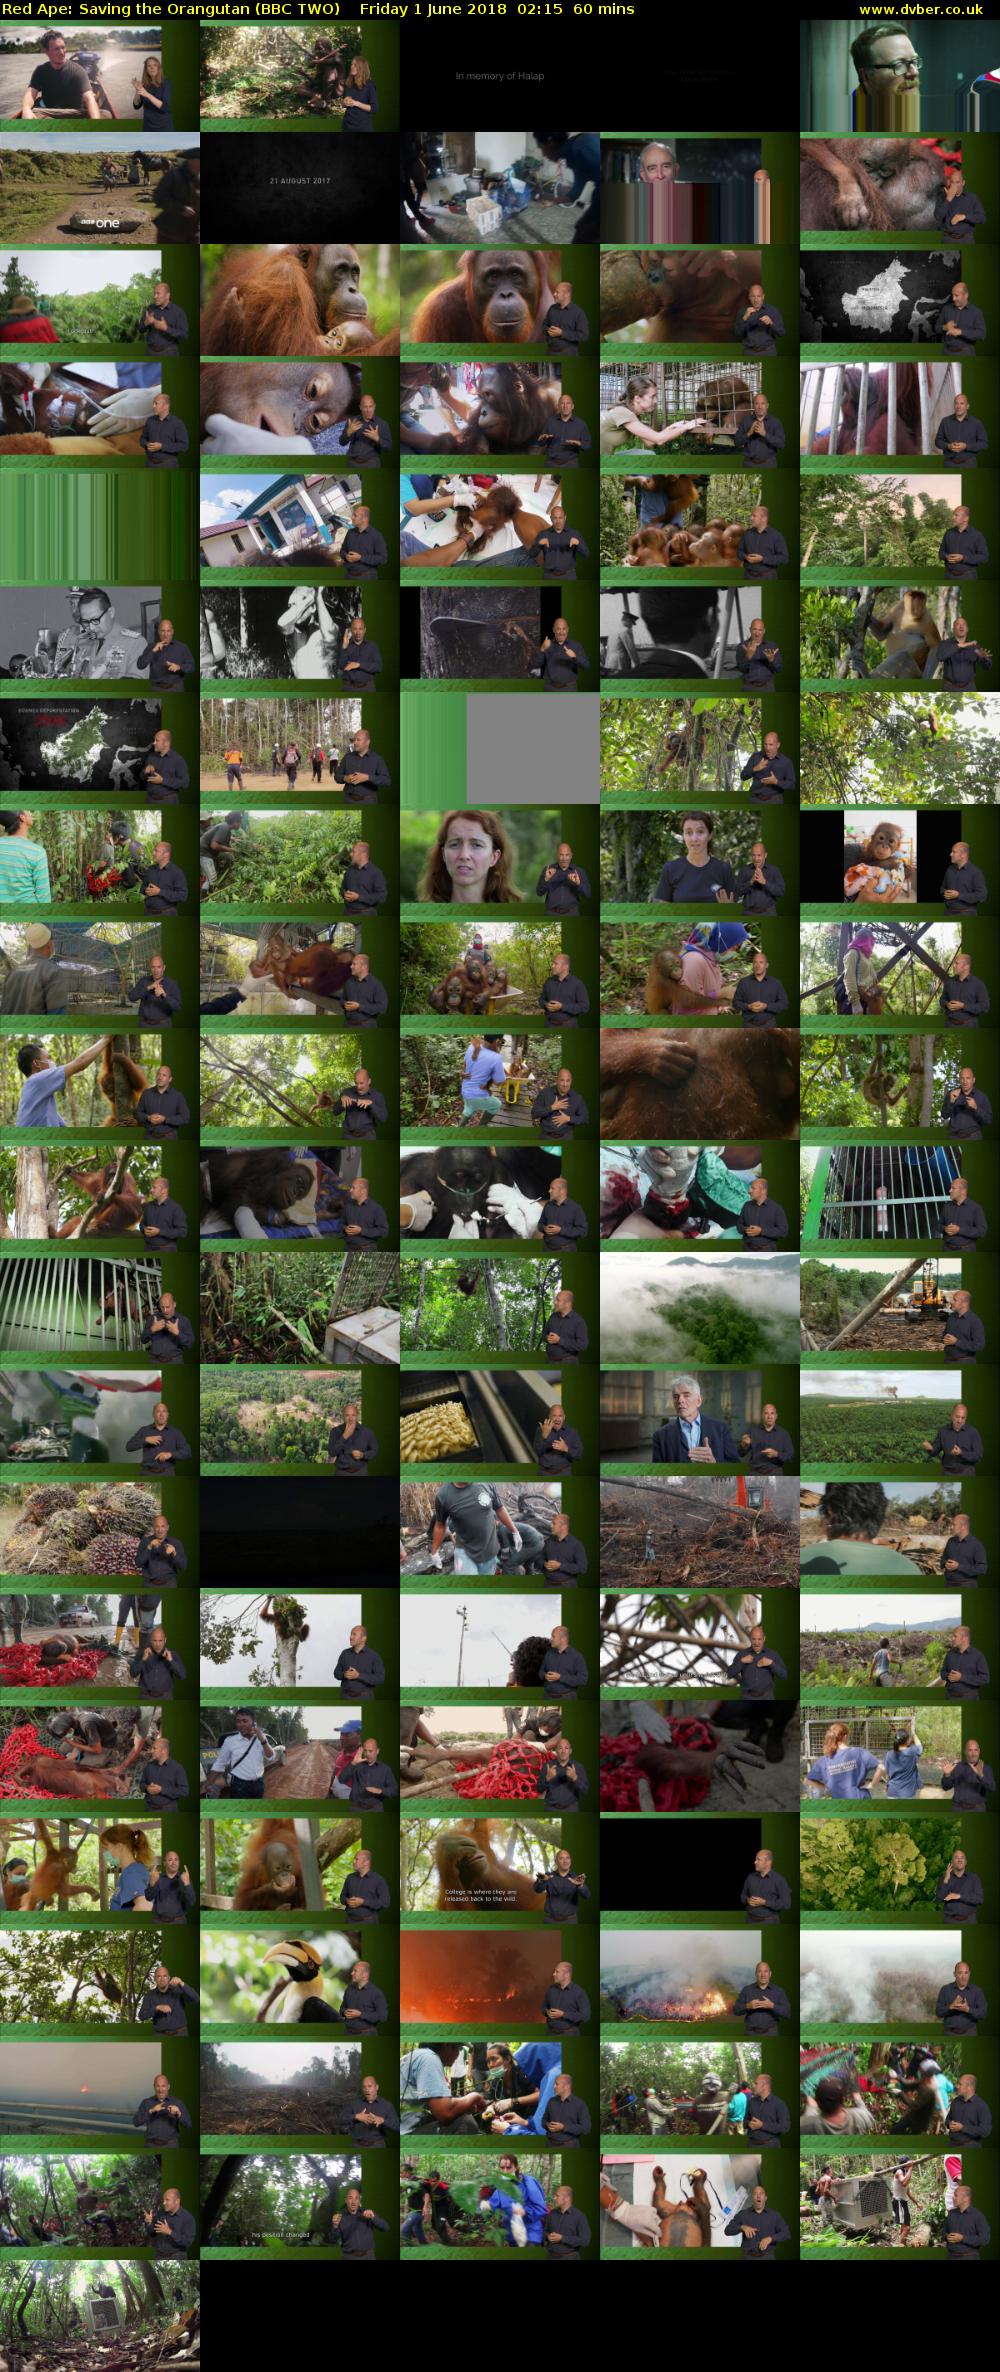 Red Ape: Saving the Orangutan (BBC TWO) Friday 1 June 2018 02:15 - 03:15